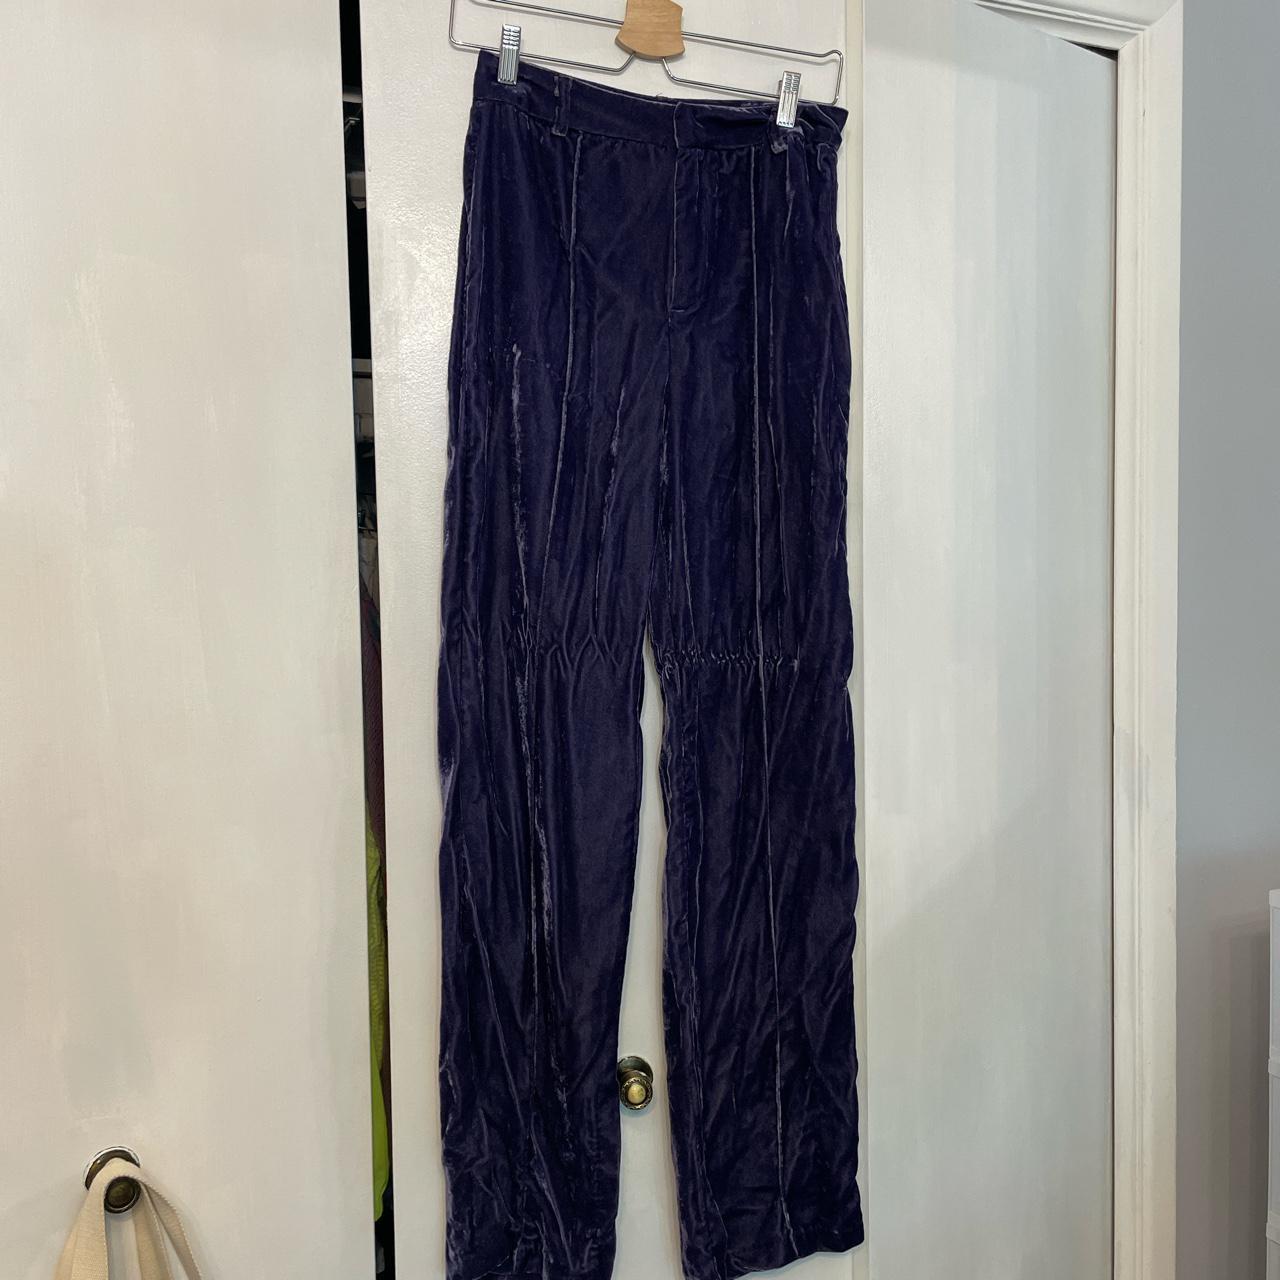 Zara velvet purple pants xs - Depop